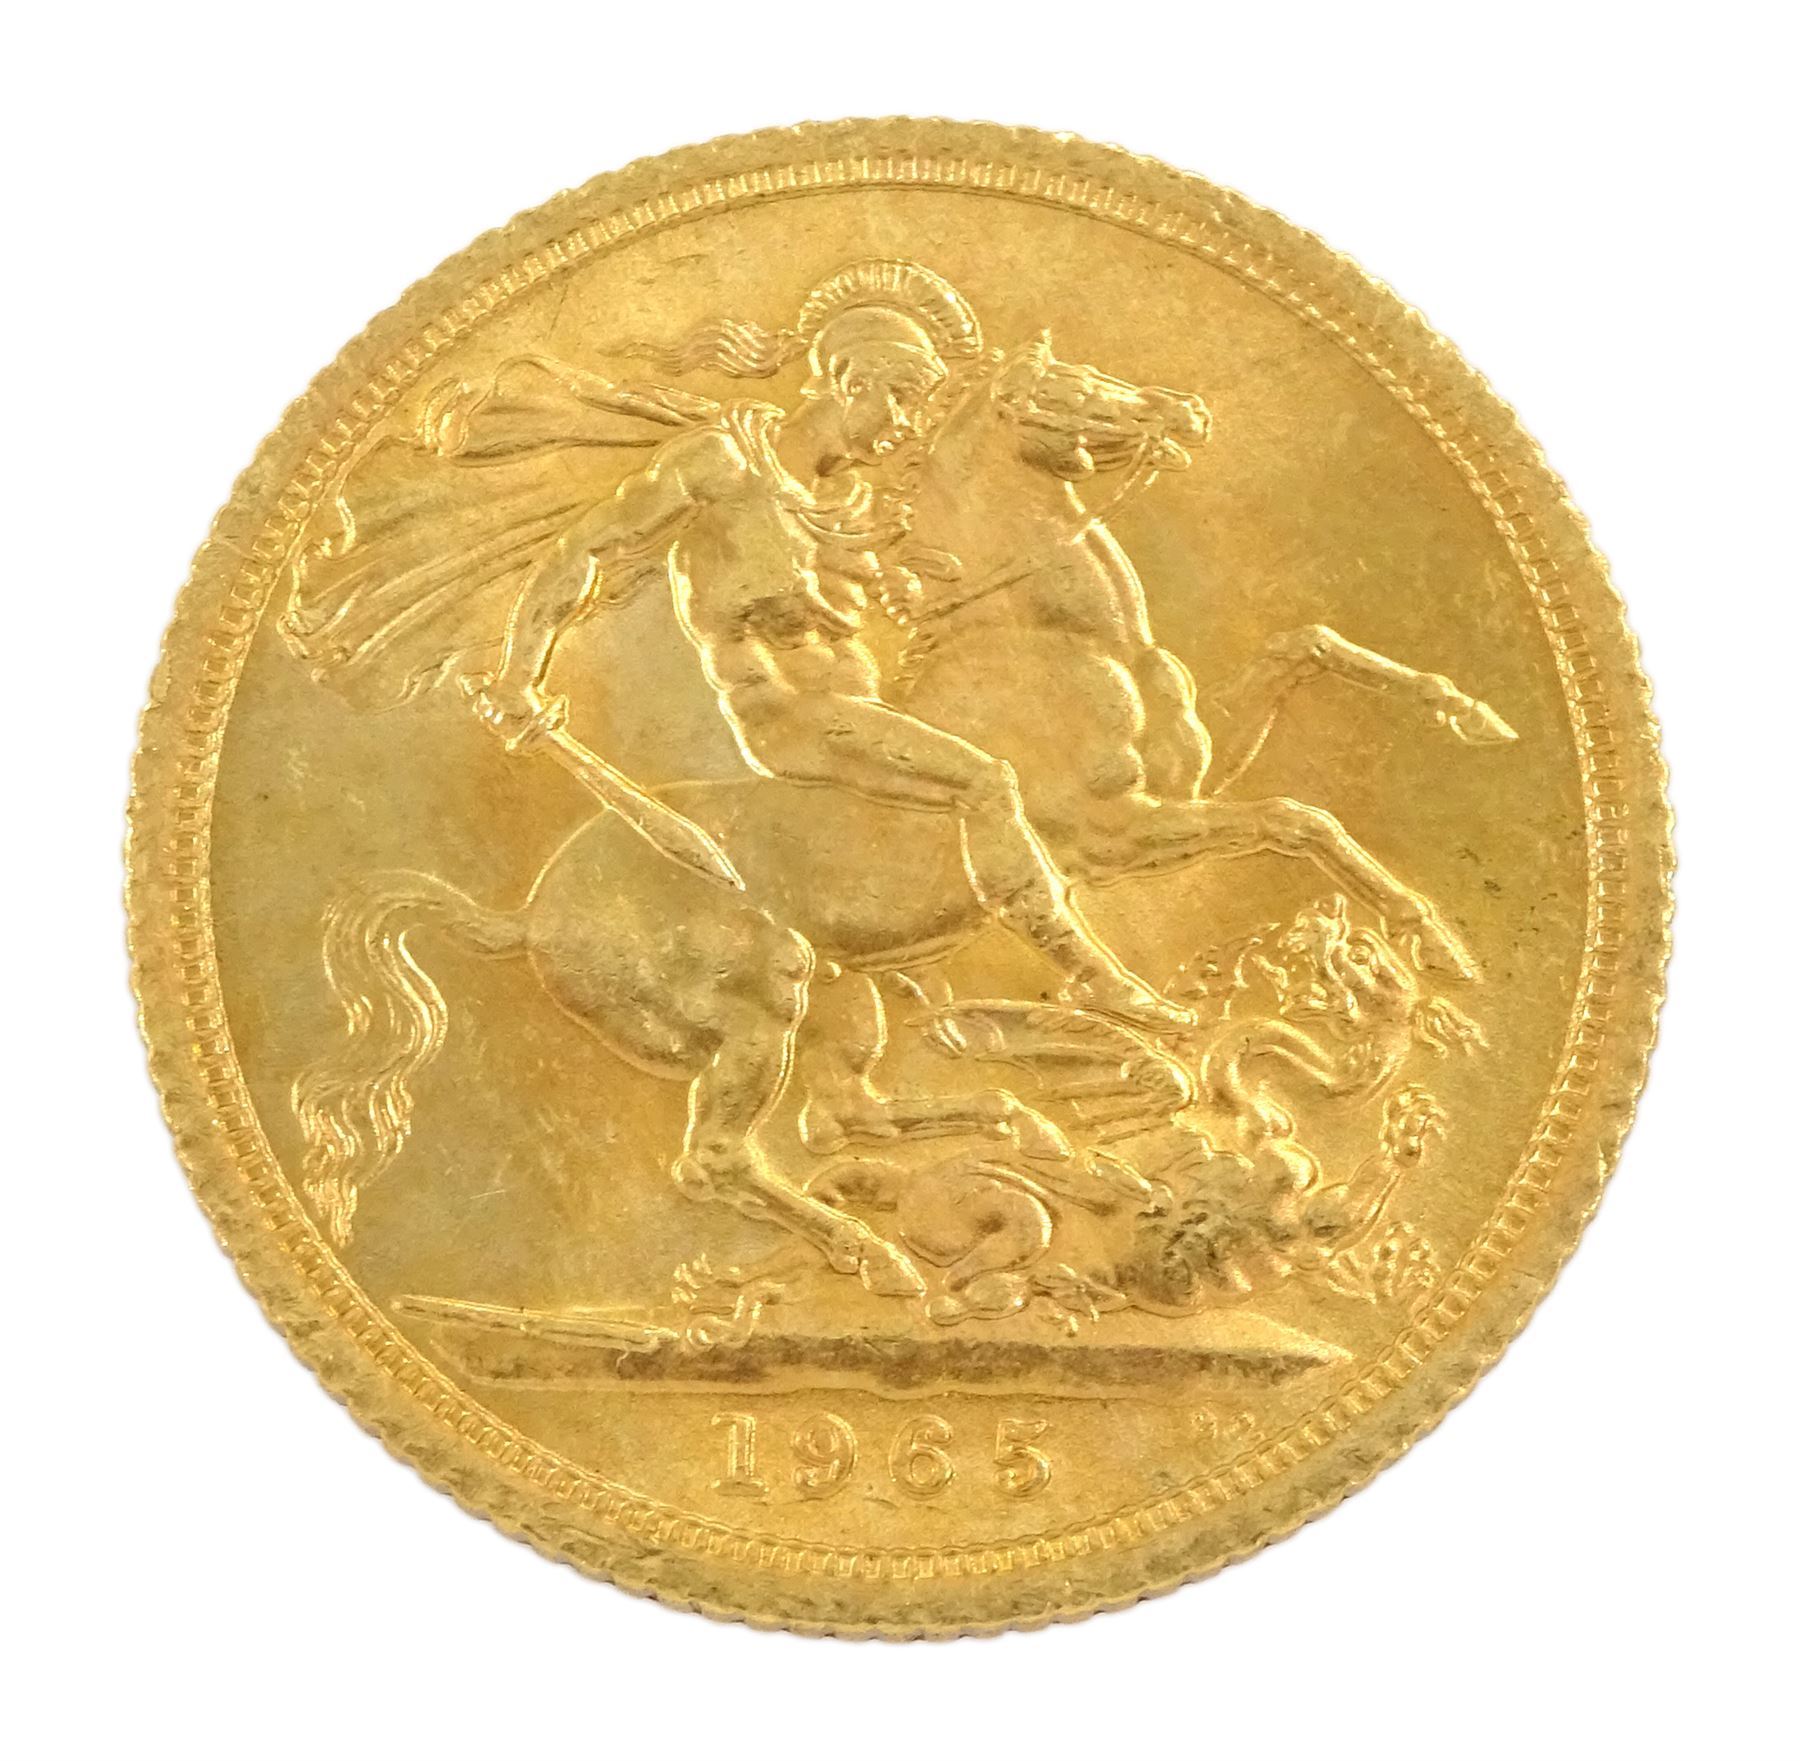 Queen Elizabeth II 1965 gold full sovereign coin - Image 2 of 3